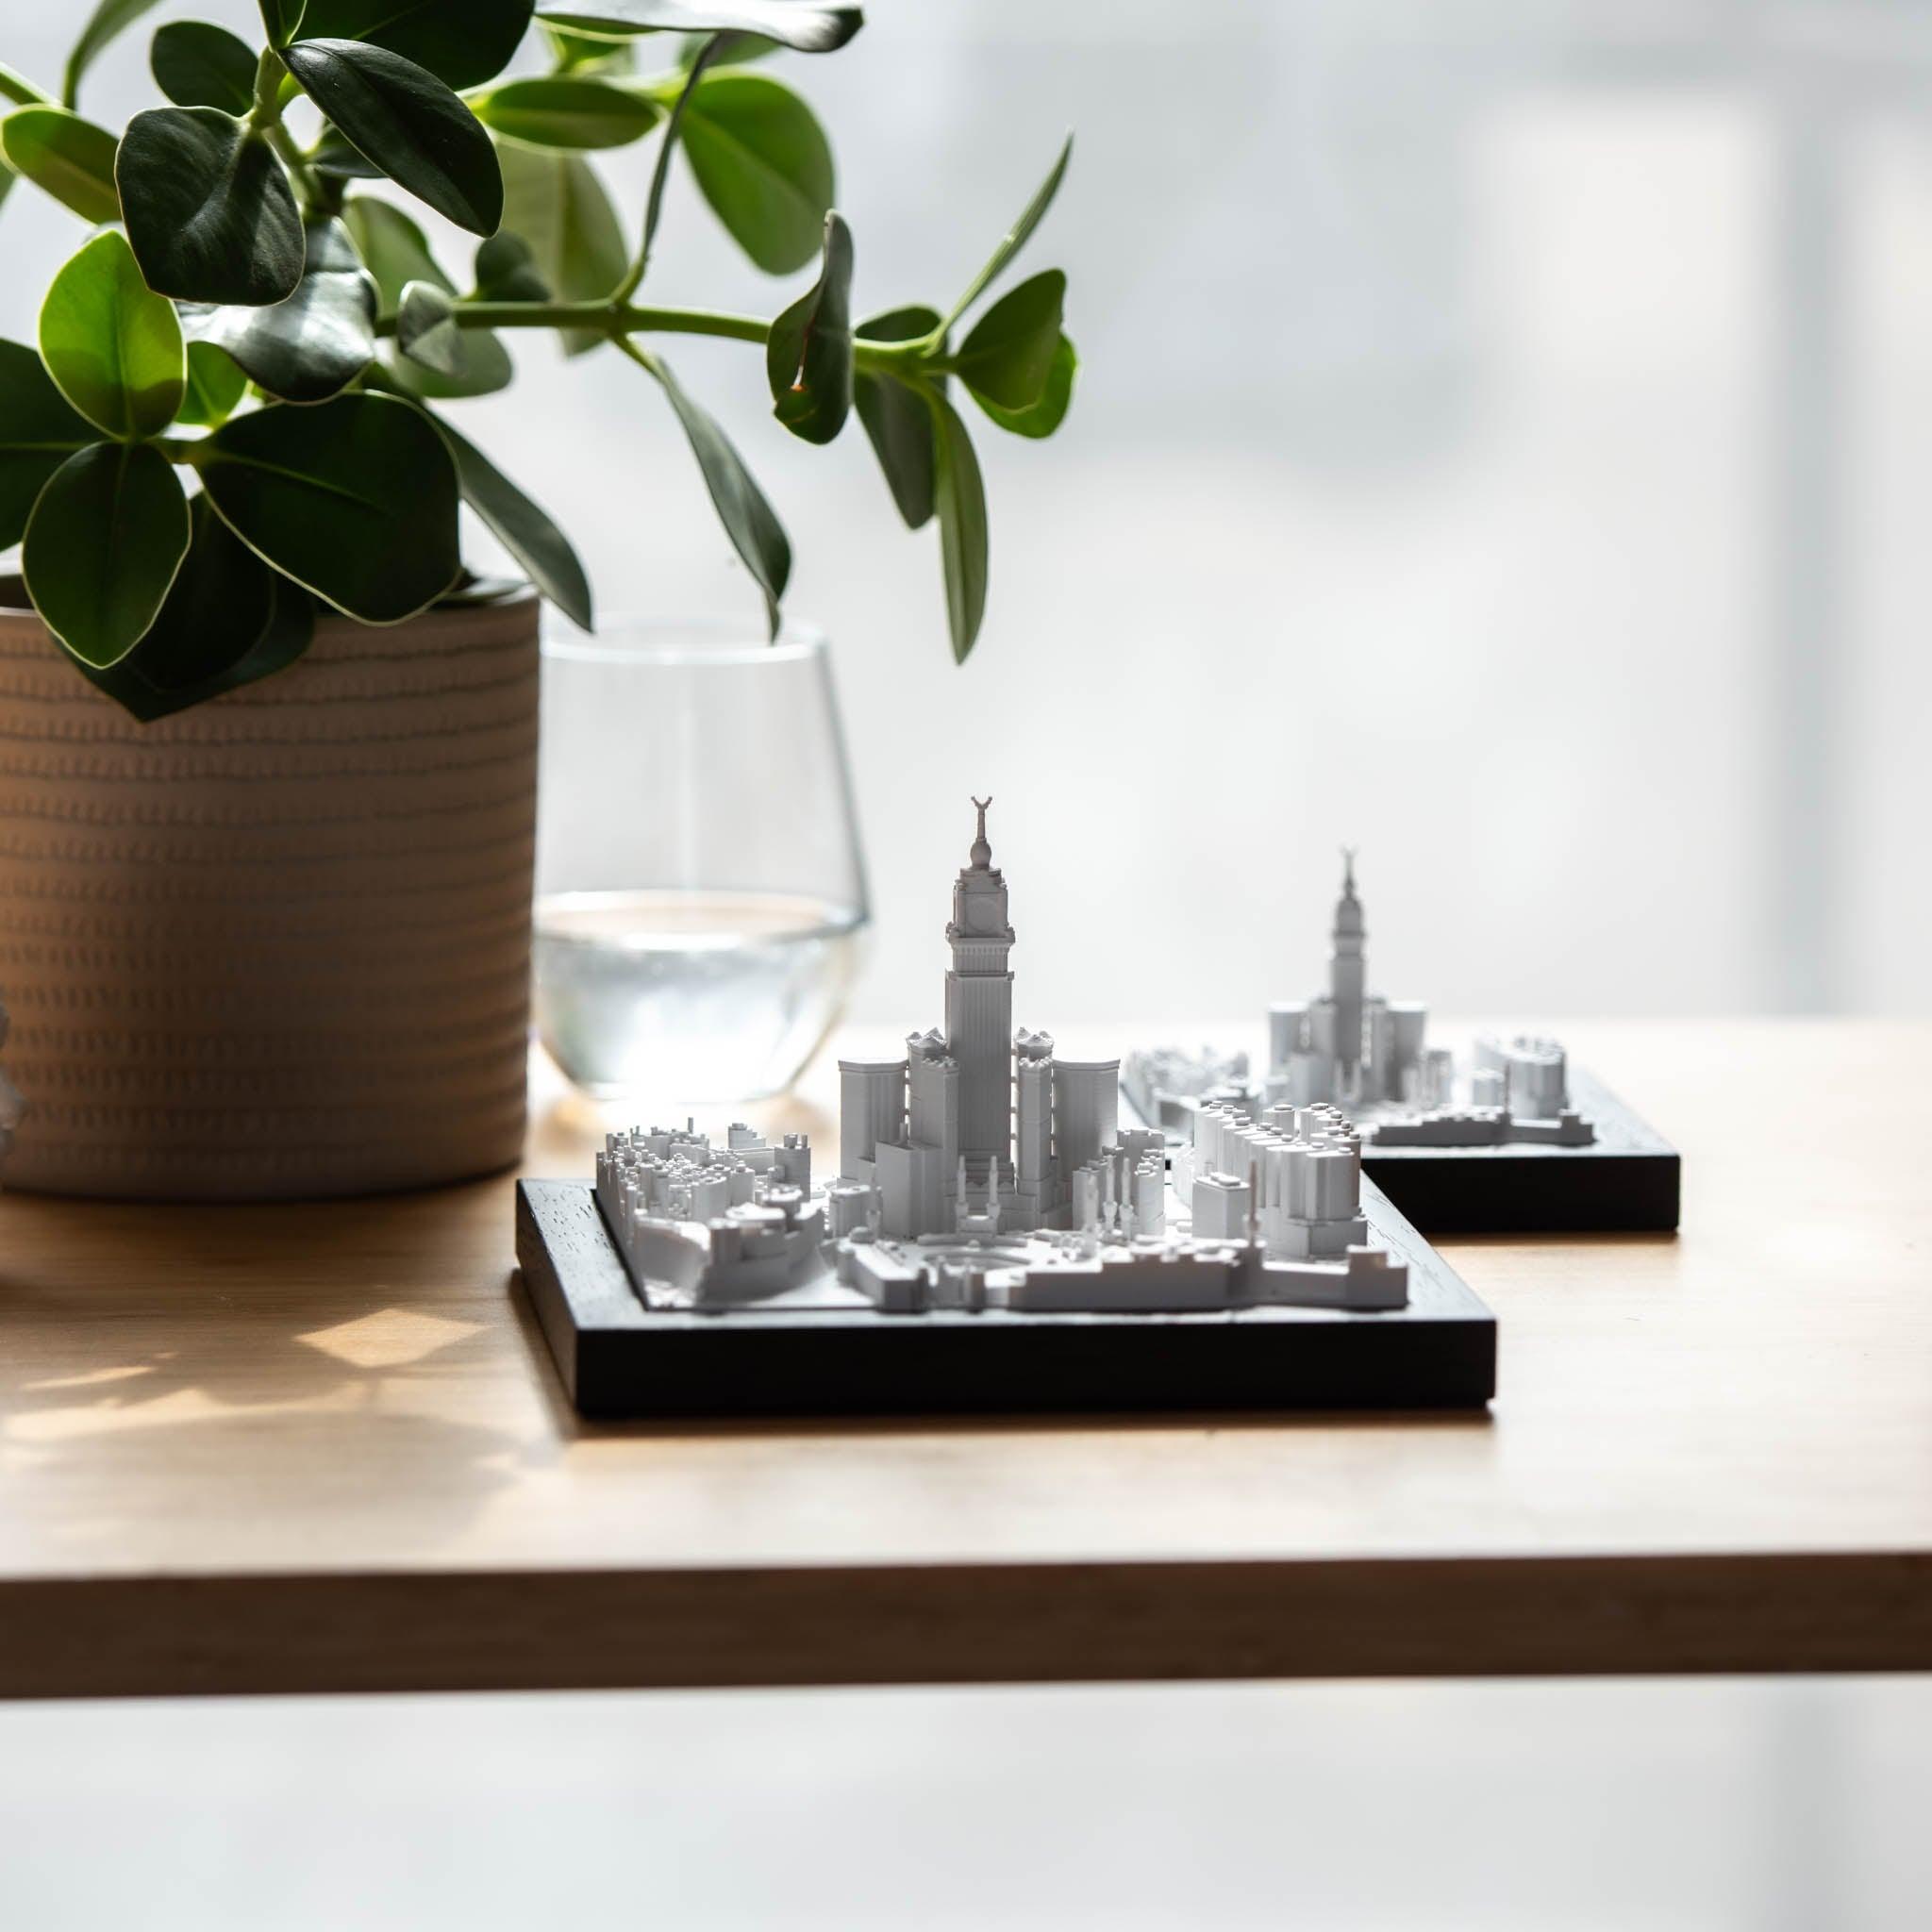 Mecca 3D City Model Cube, Middle East - CITYFRAMES